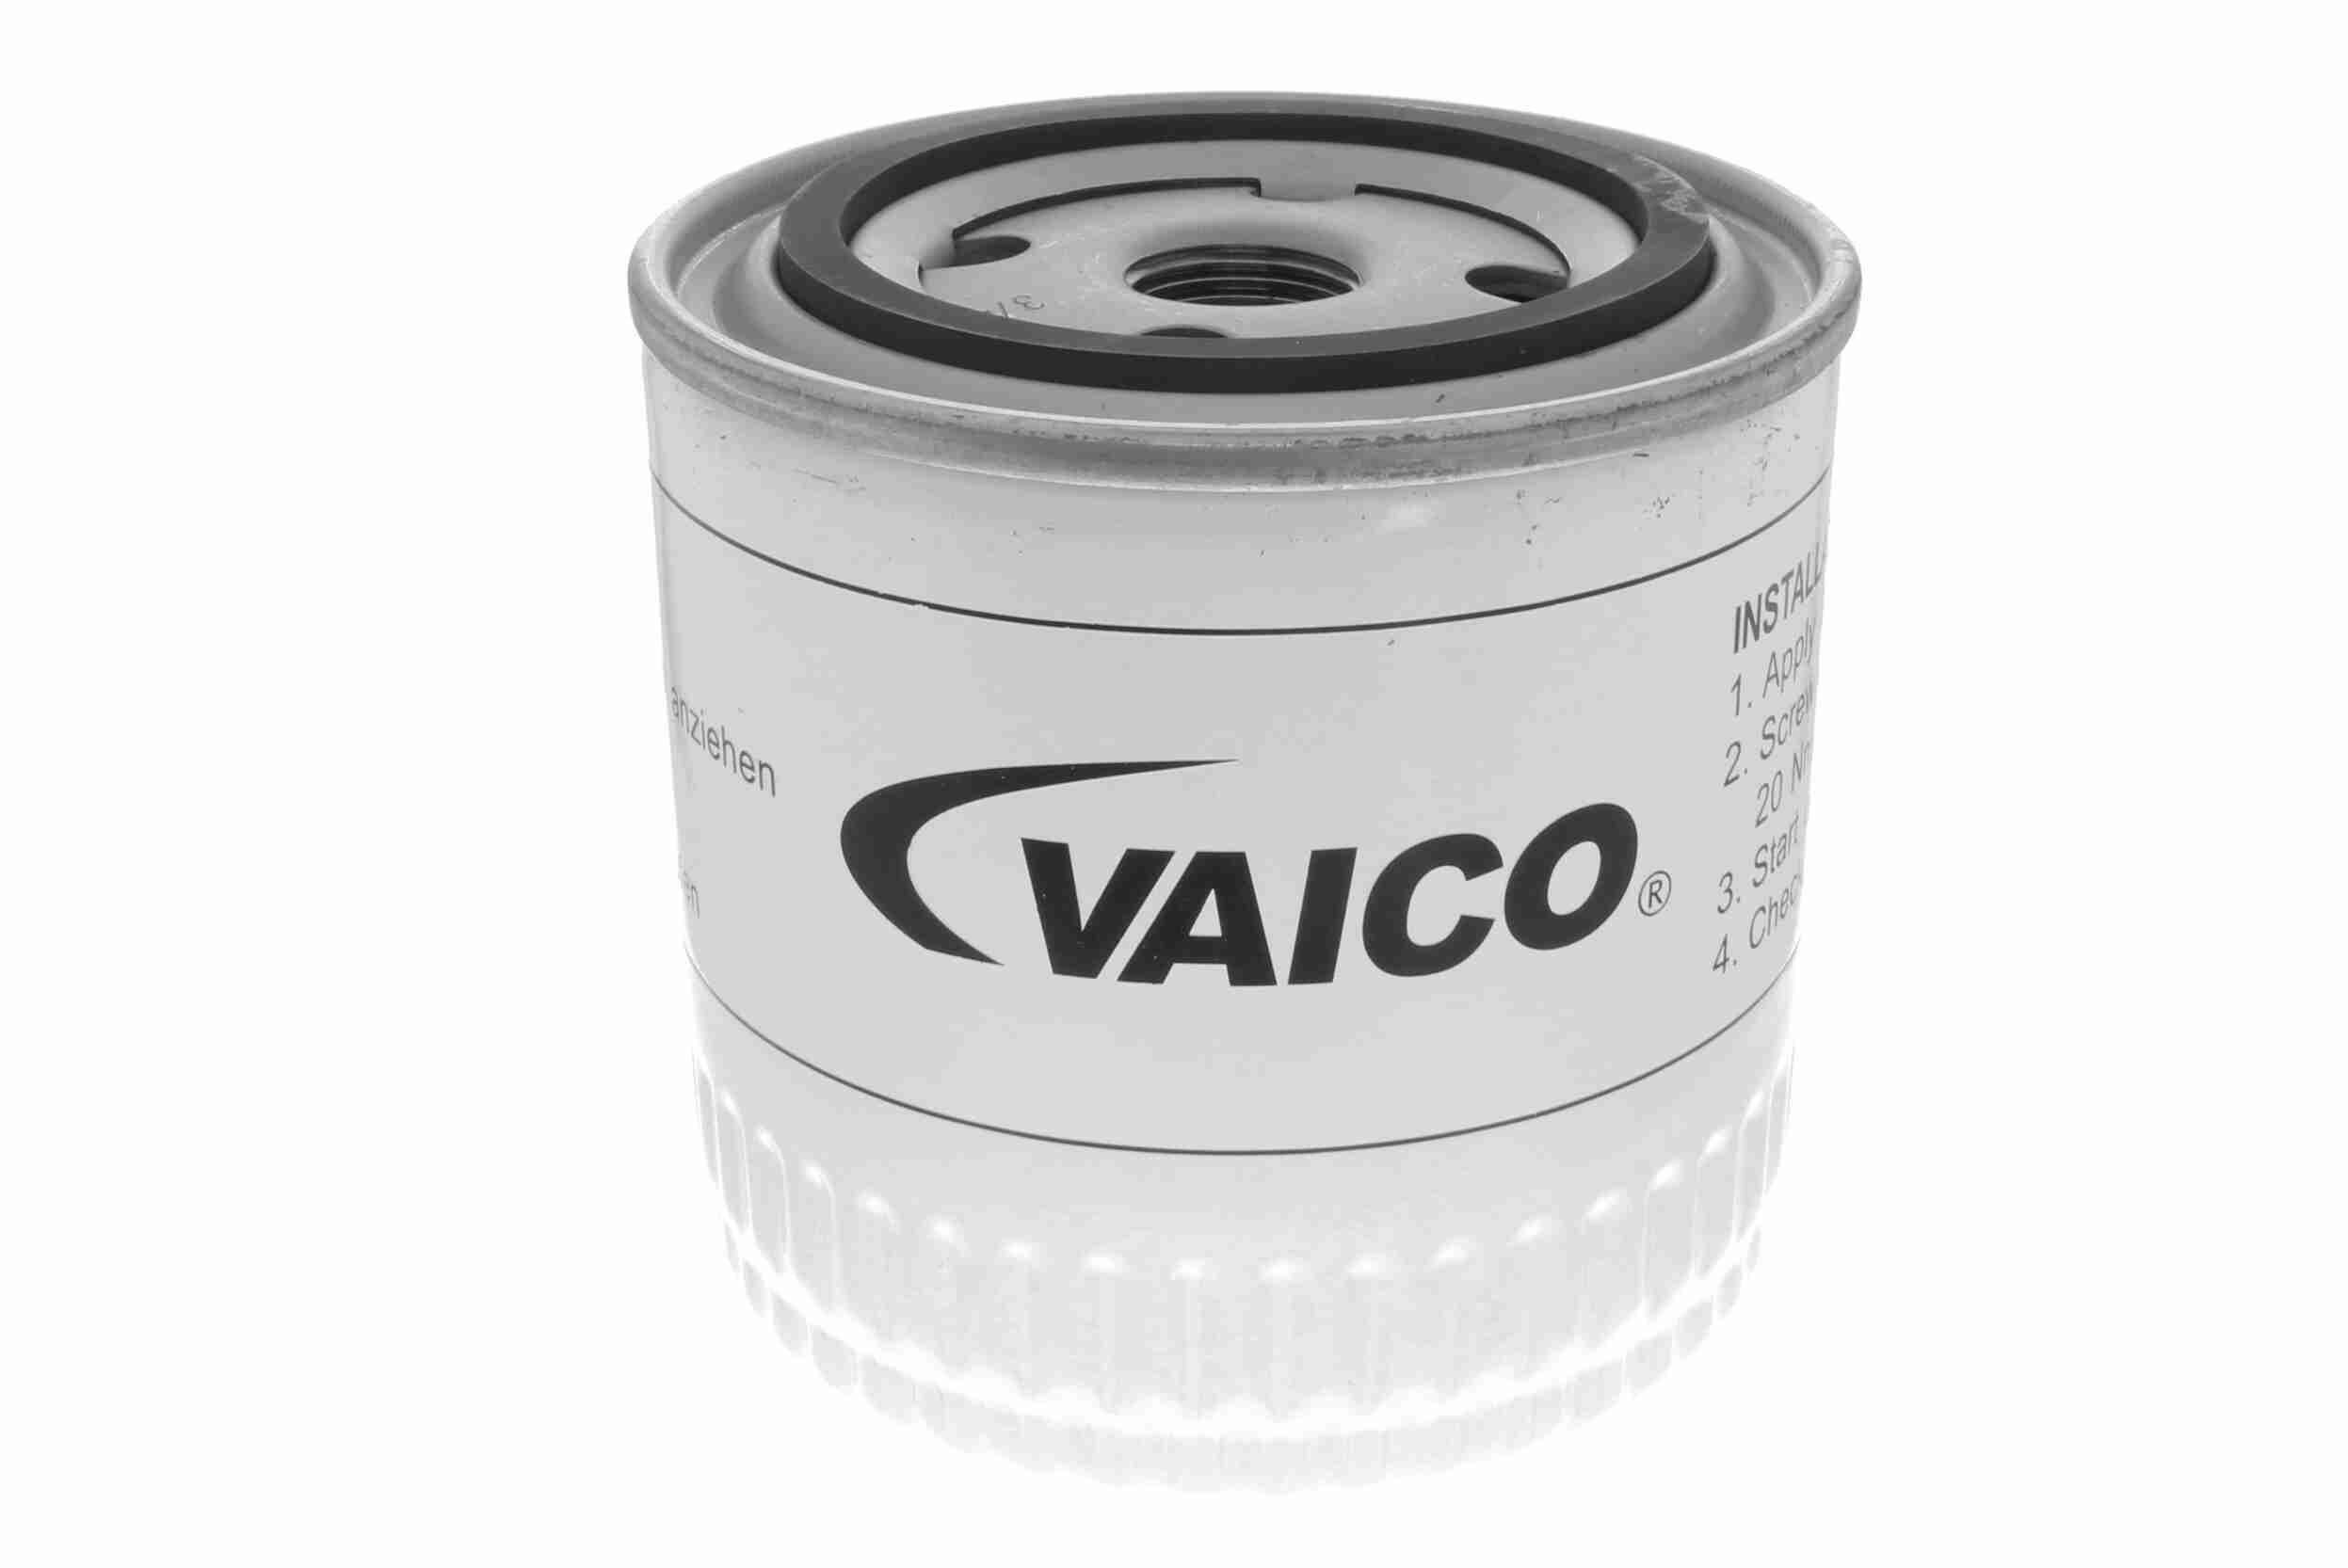 V25-0102 VAICO Anschraubfilter, mit einem Rücklaufsperrventil, Original VAICO Qualität Innendurchmesser 2: 62mm, Innendurchmesser 2: 71mm, Ø: 93mm, Ø: 93mm, Höhe: 95mm Ölfilter V25-0102 günstig kaufen